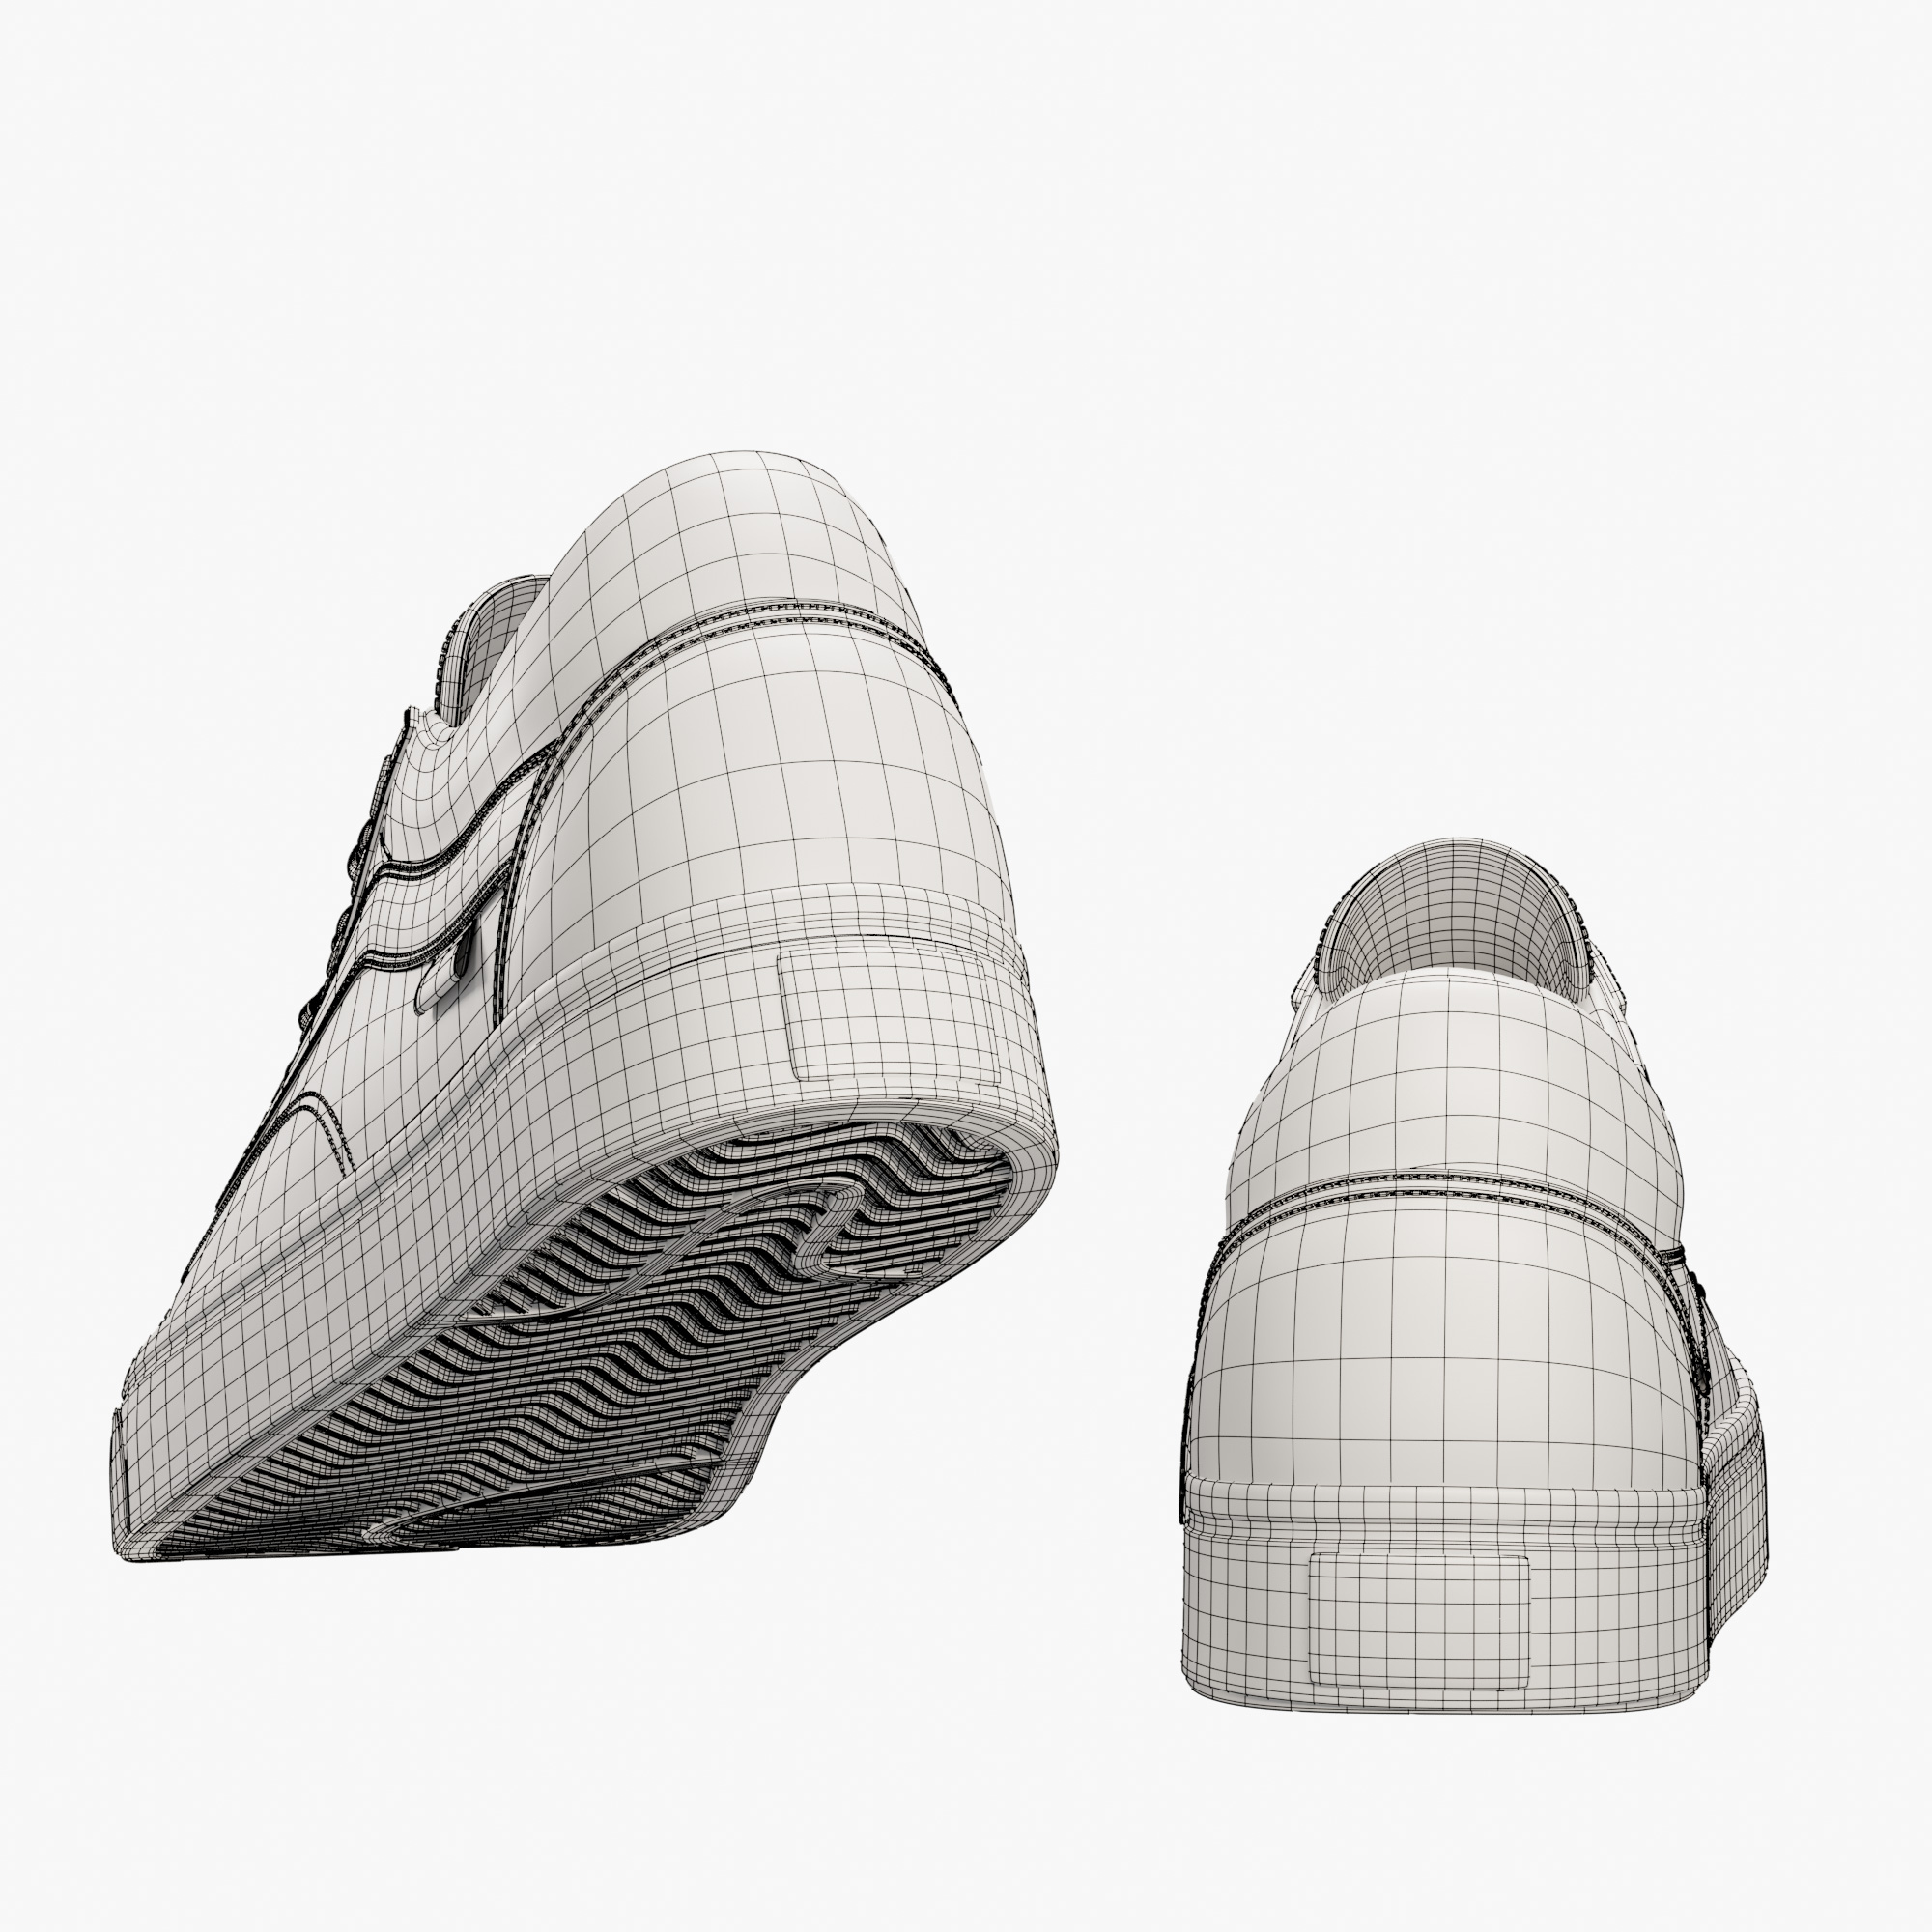 Shoes modeled blender 3D model - TurboSquid 1660705